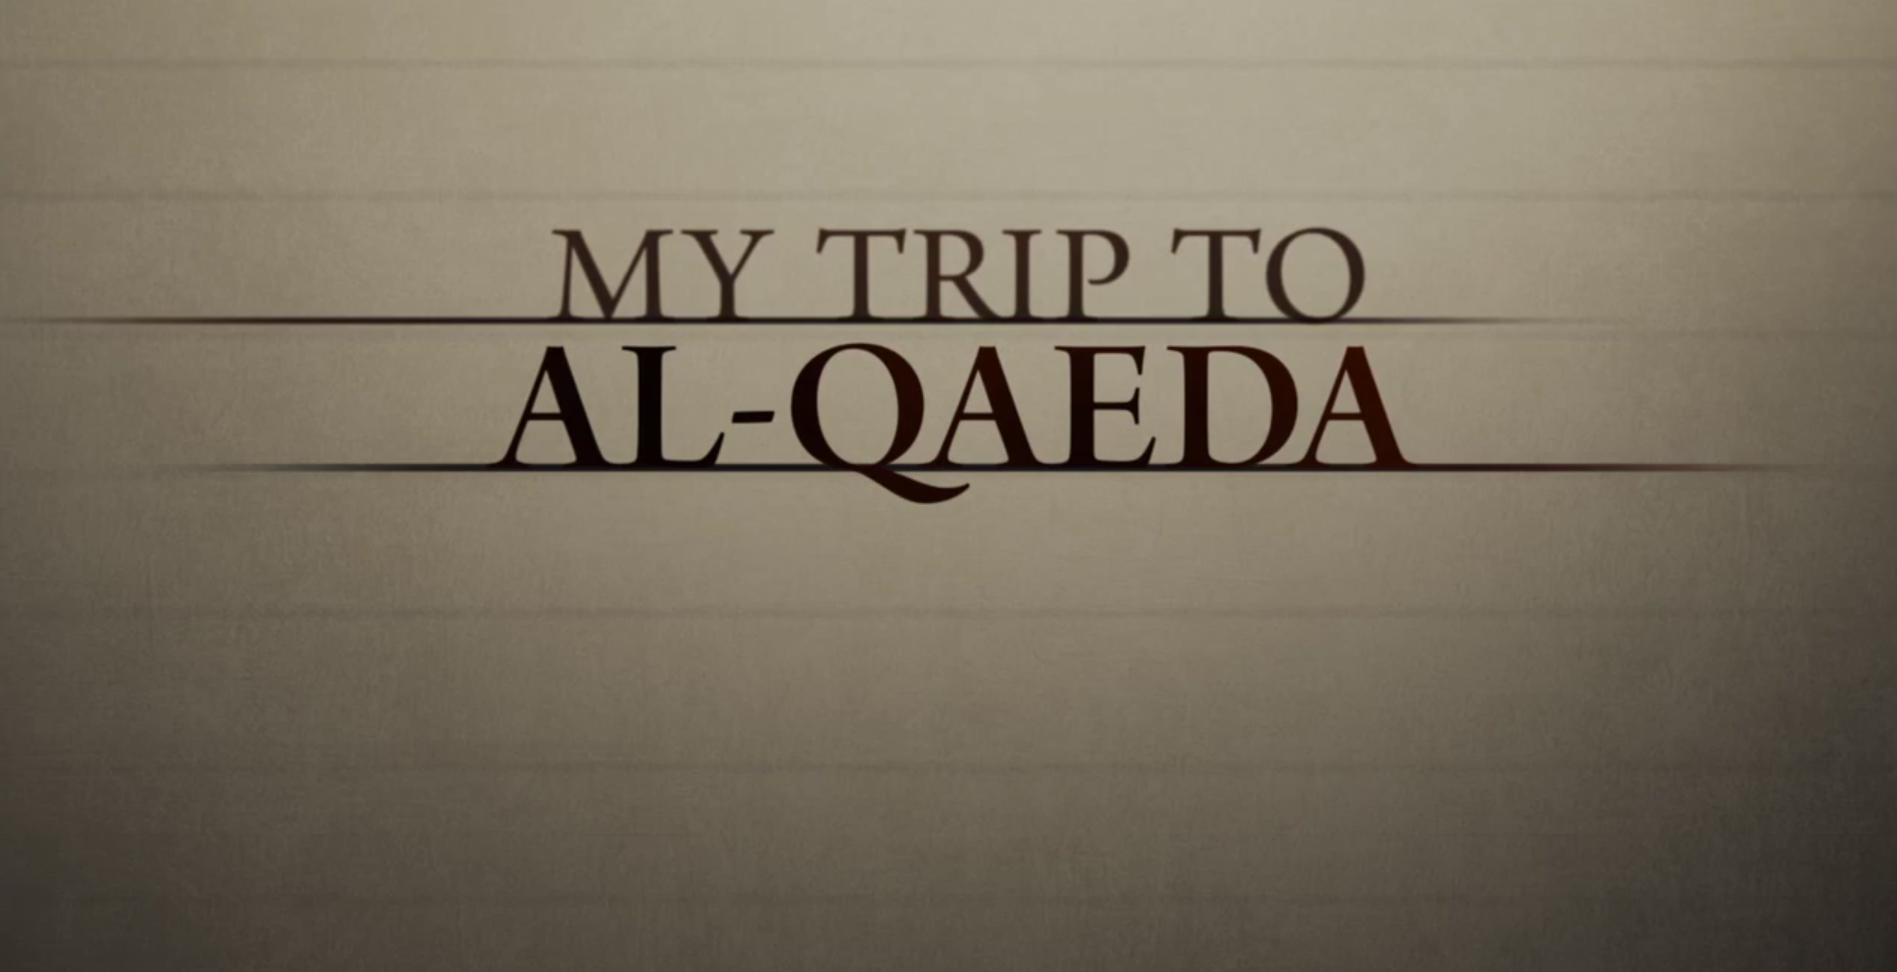 My Trip to Al-QAEDA